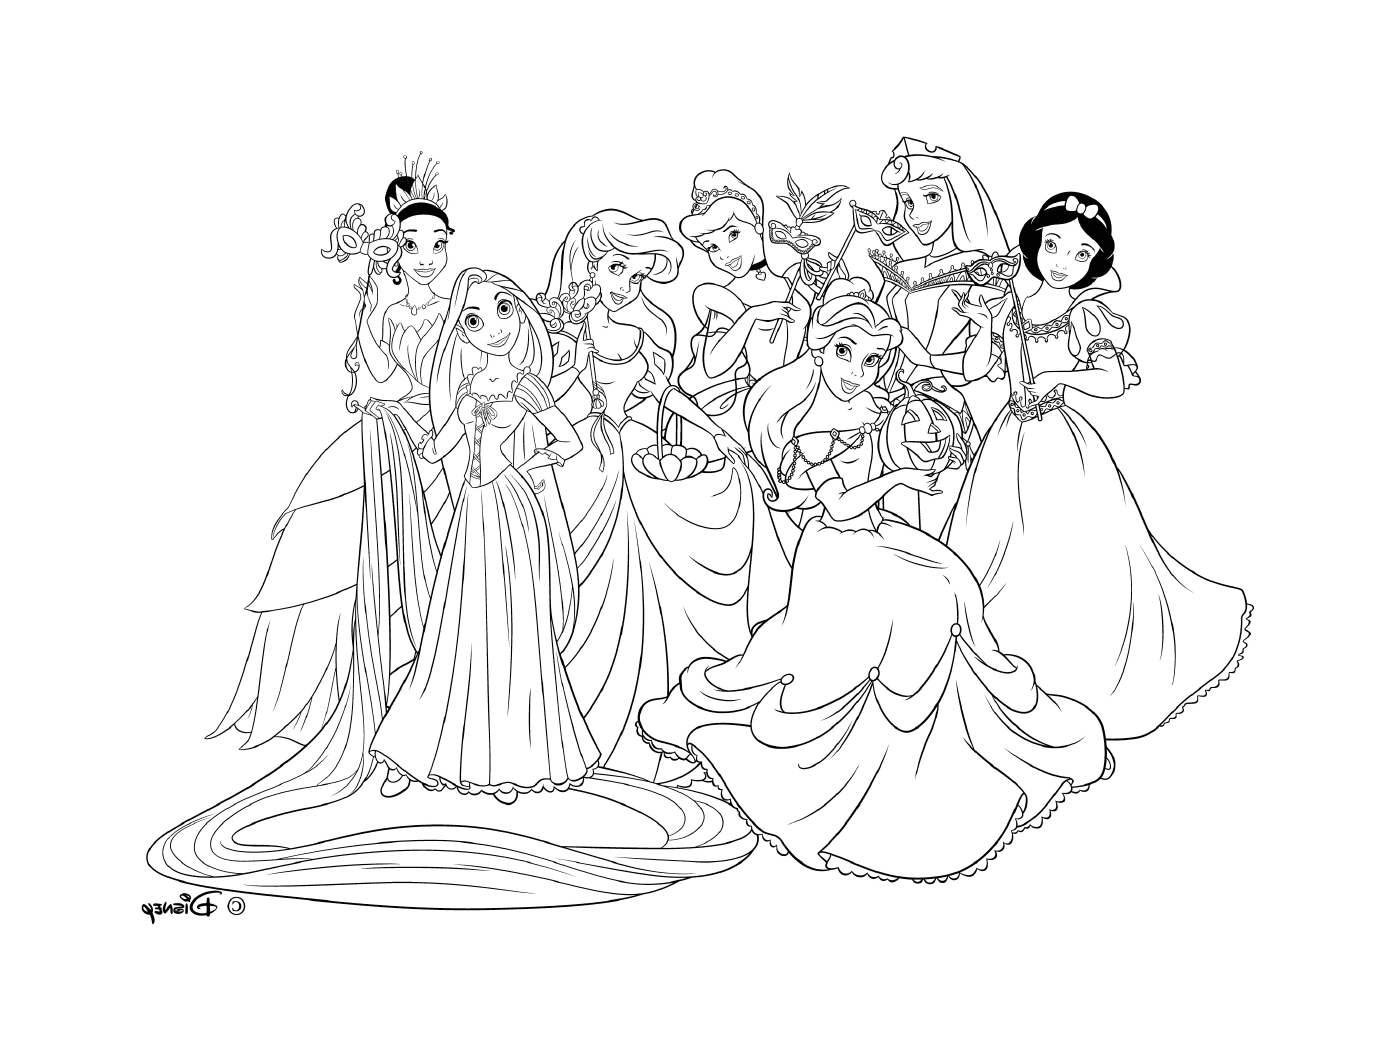  A group of Disney princesses posing for a photo 